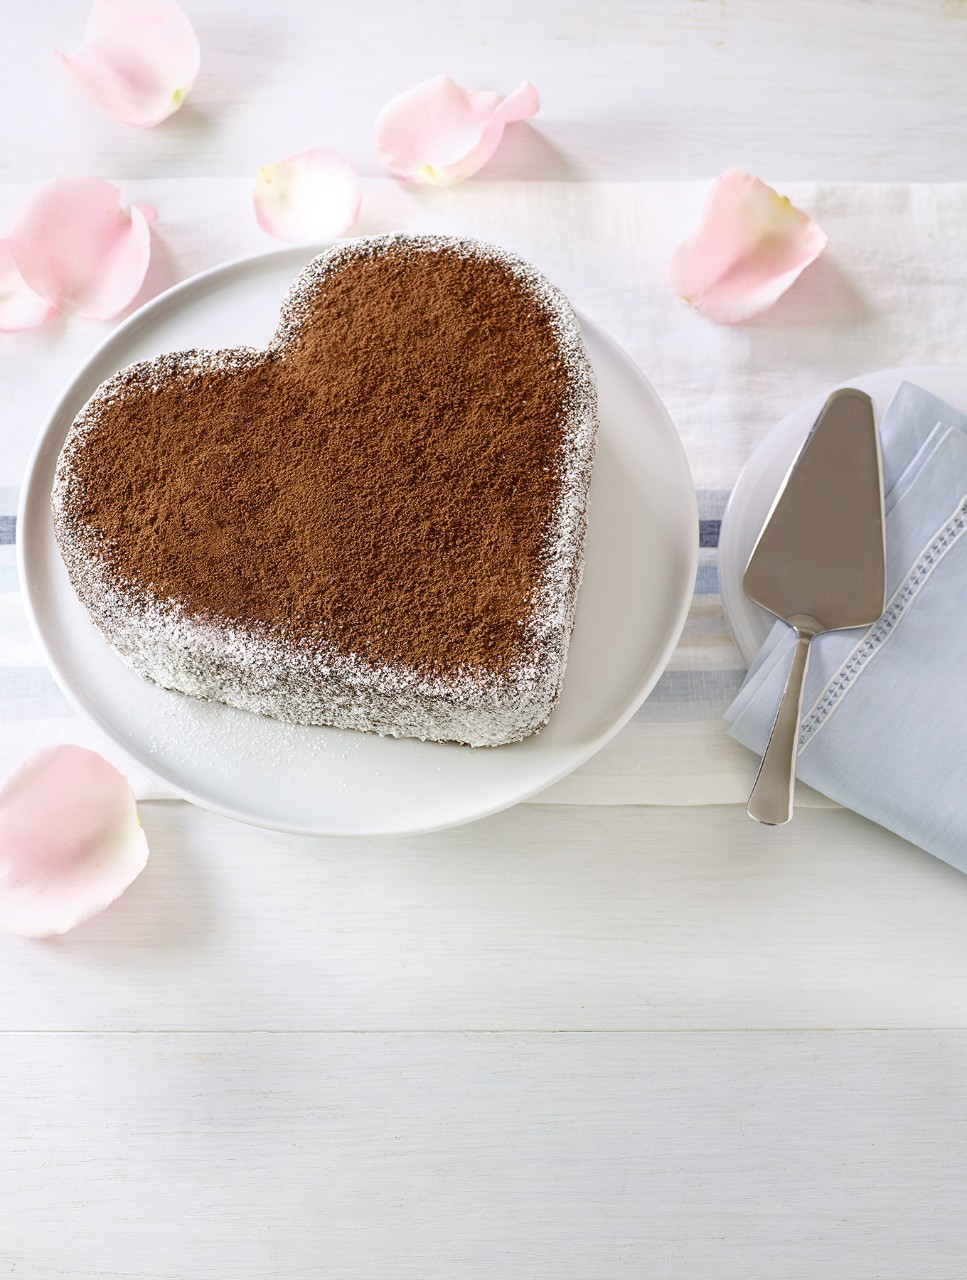 Gâteau au chocolat de la Saint-Valentin